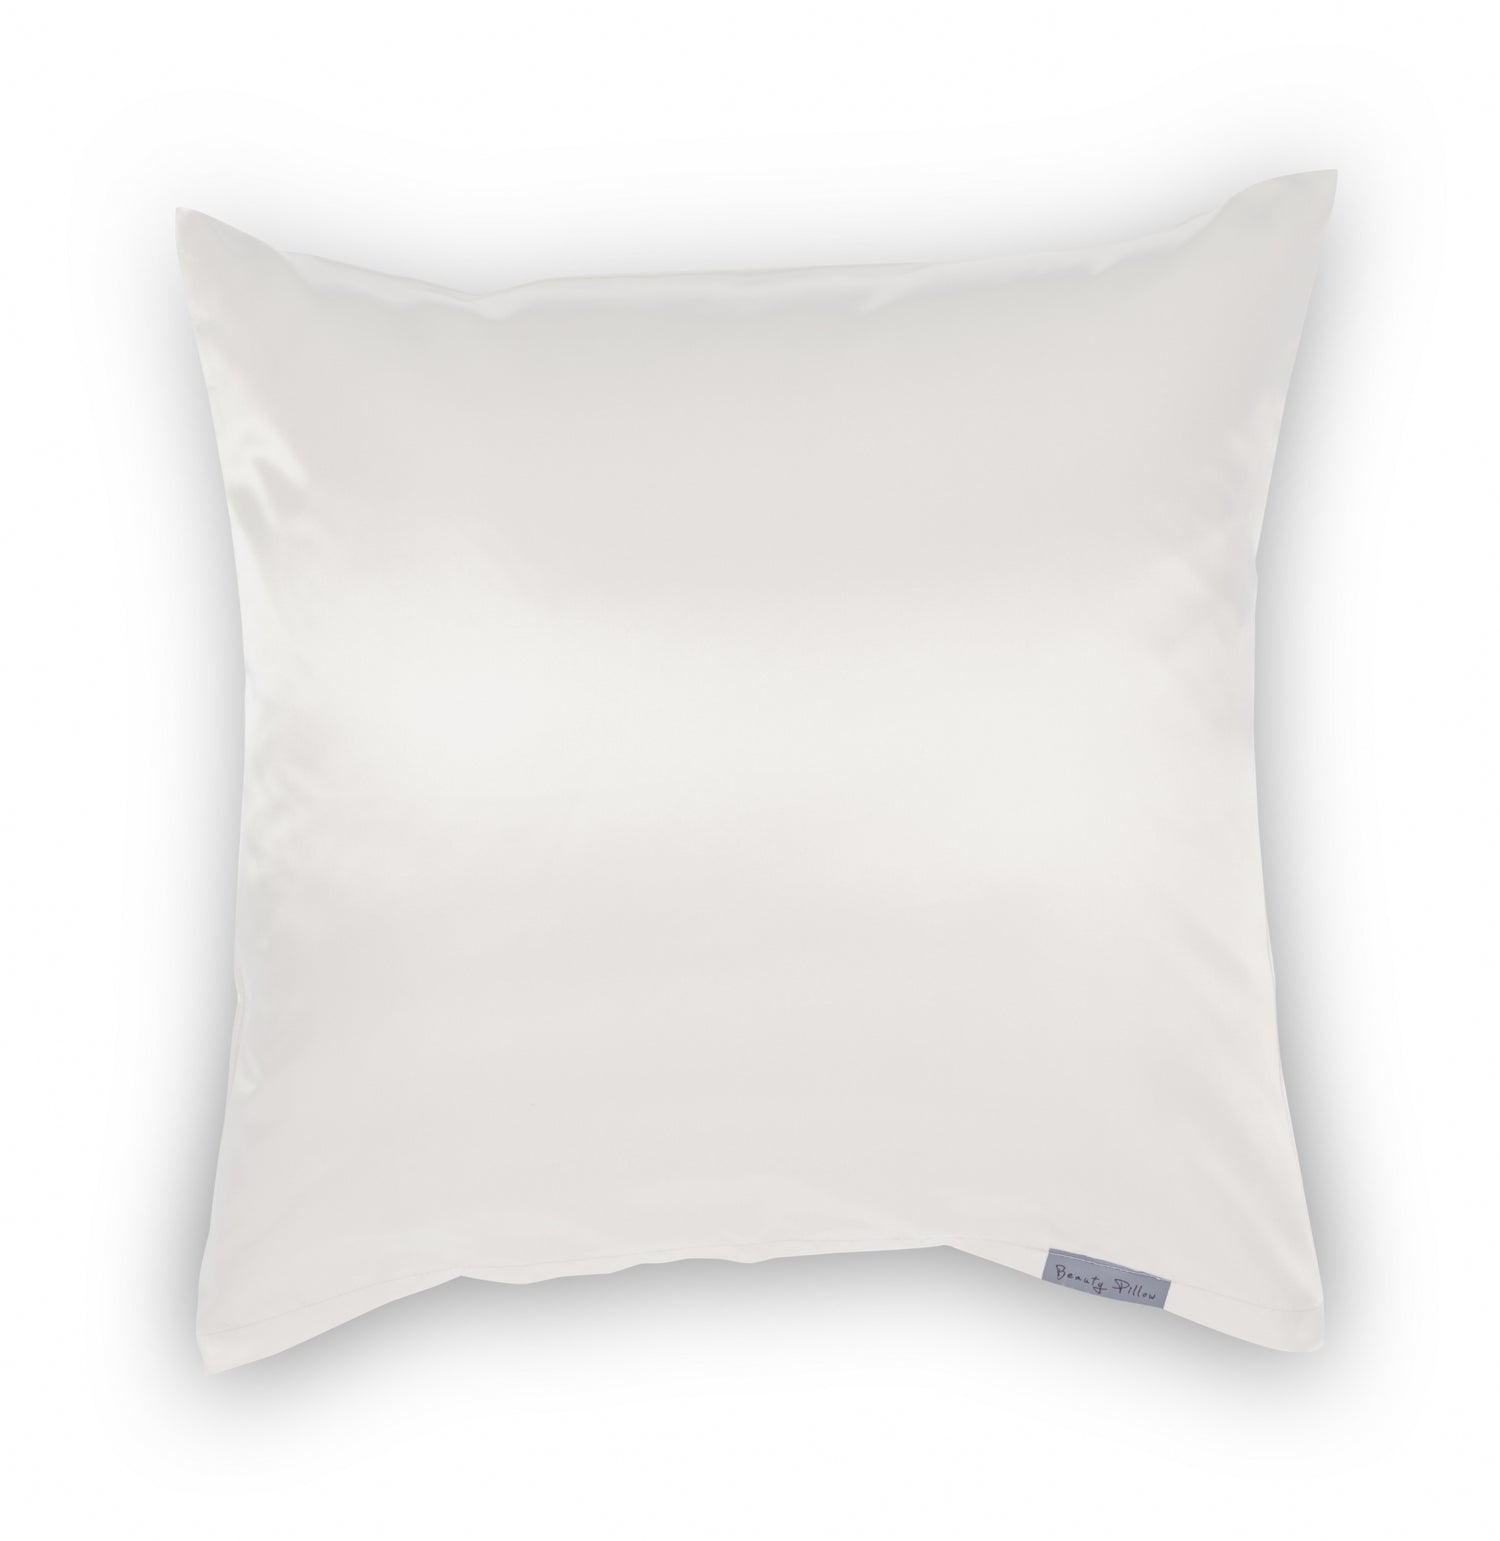 Beauty Pillow® Pearl 60x70